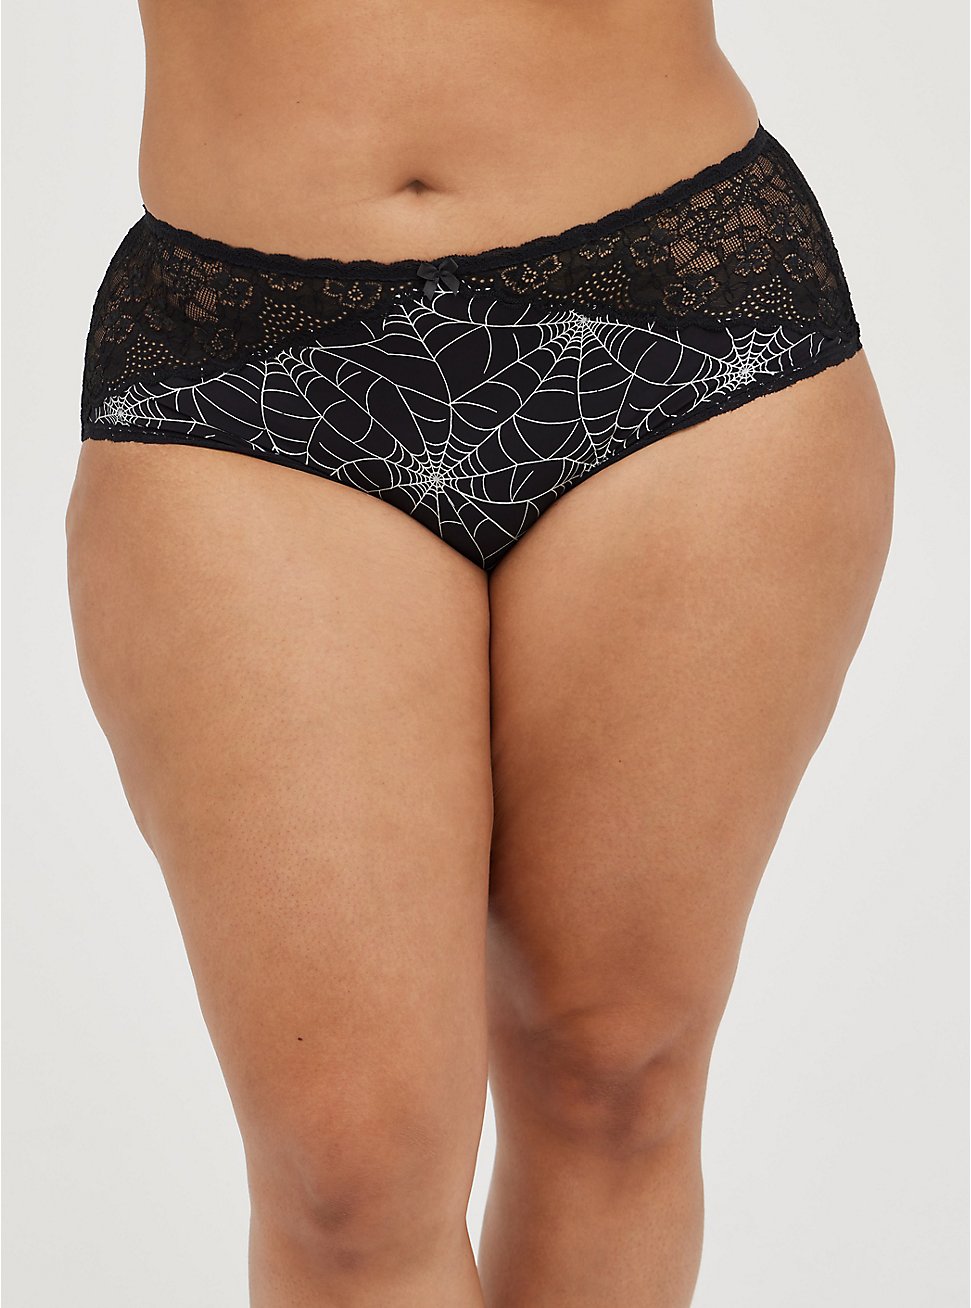 Plus Size Cheeky Panty - Microfiber & Lace Spiderweb Black, RICH BLACK, hi-res